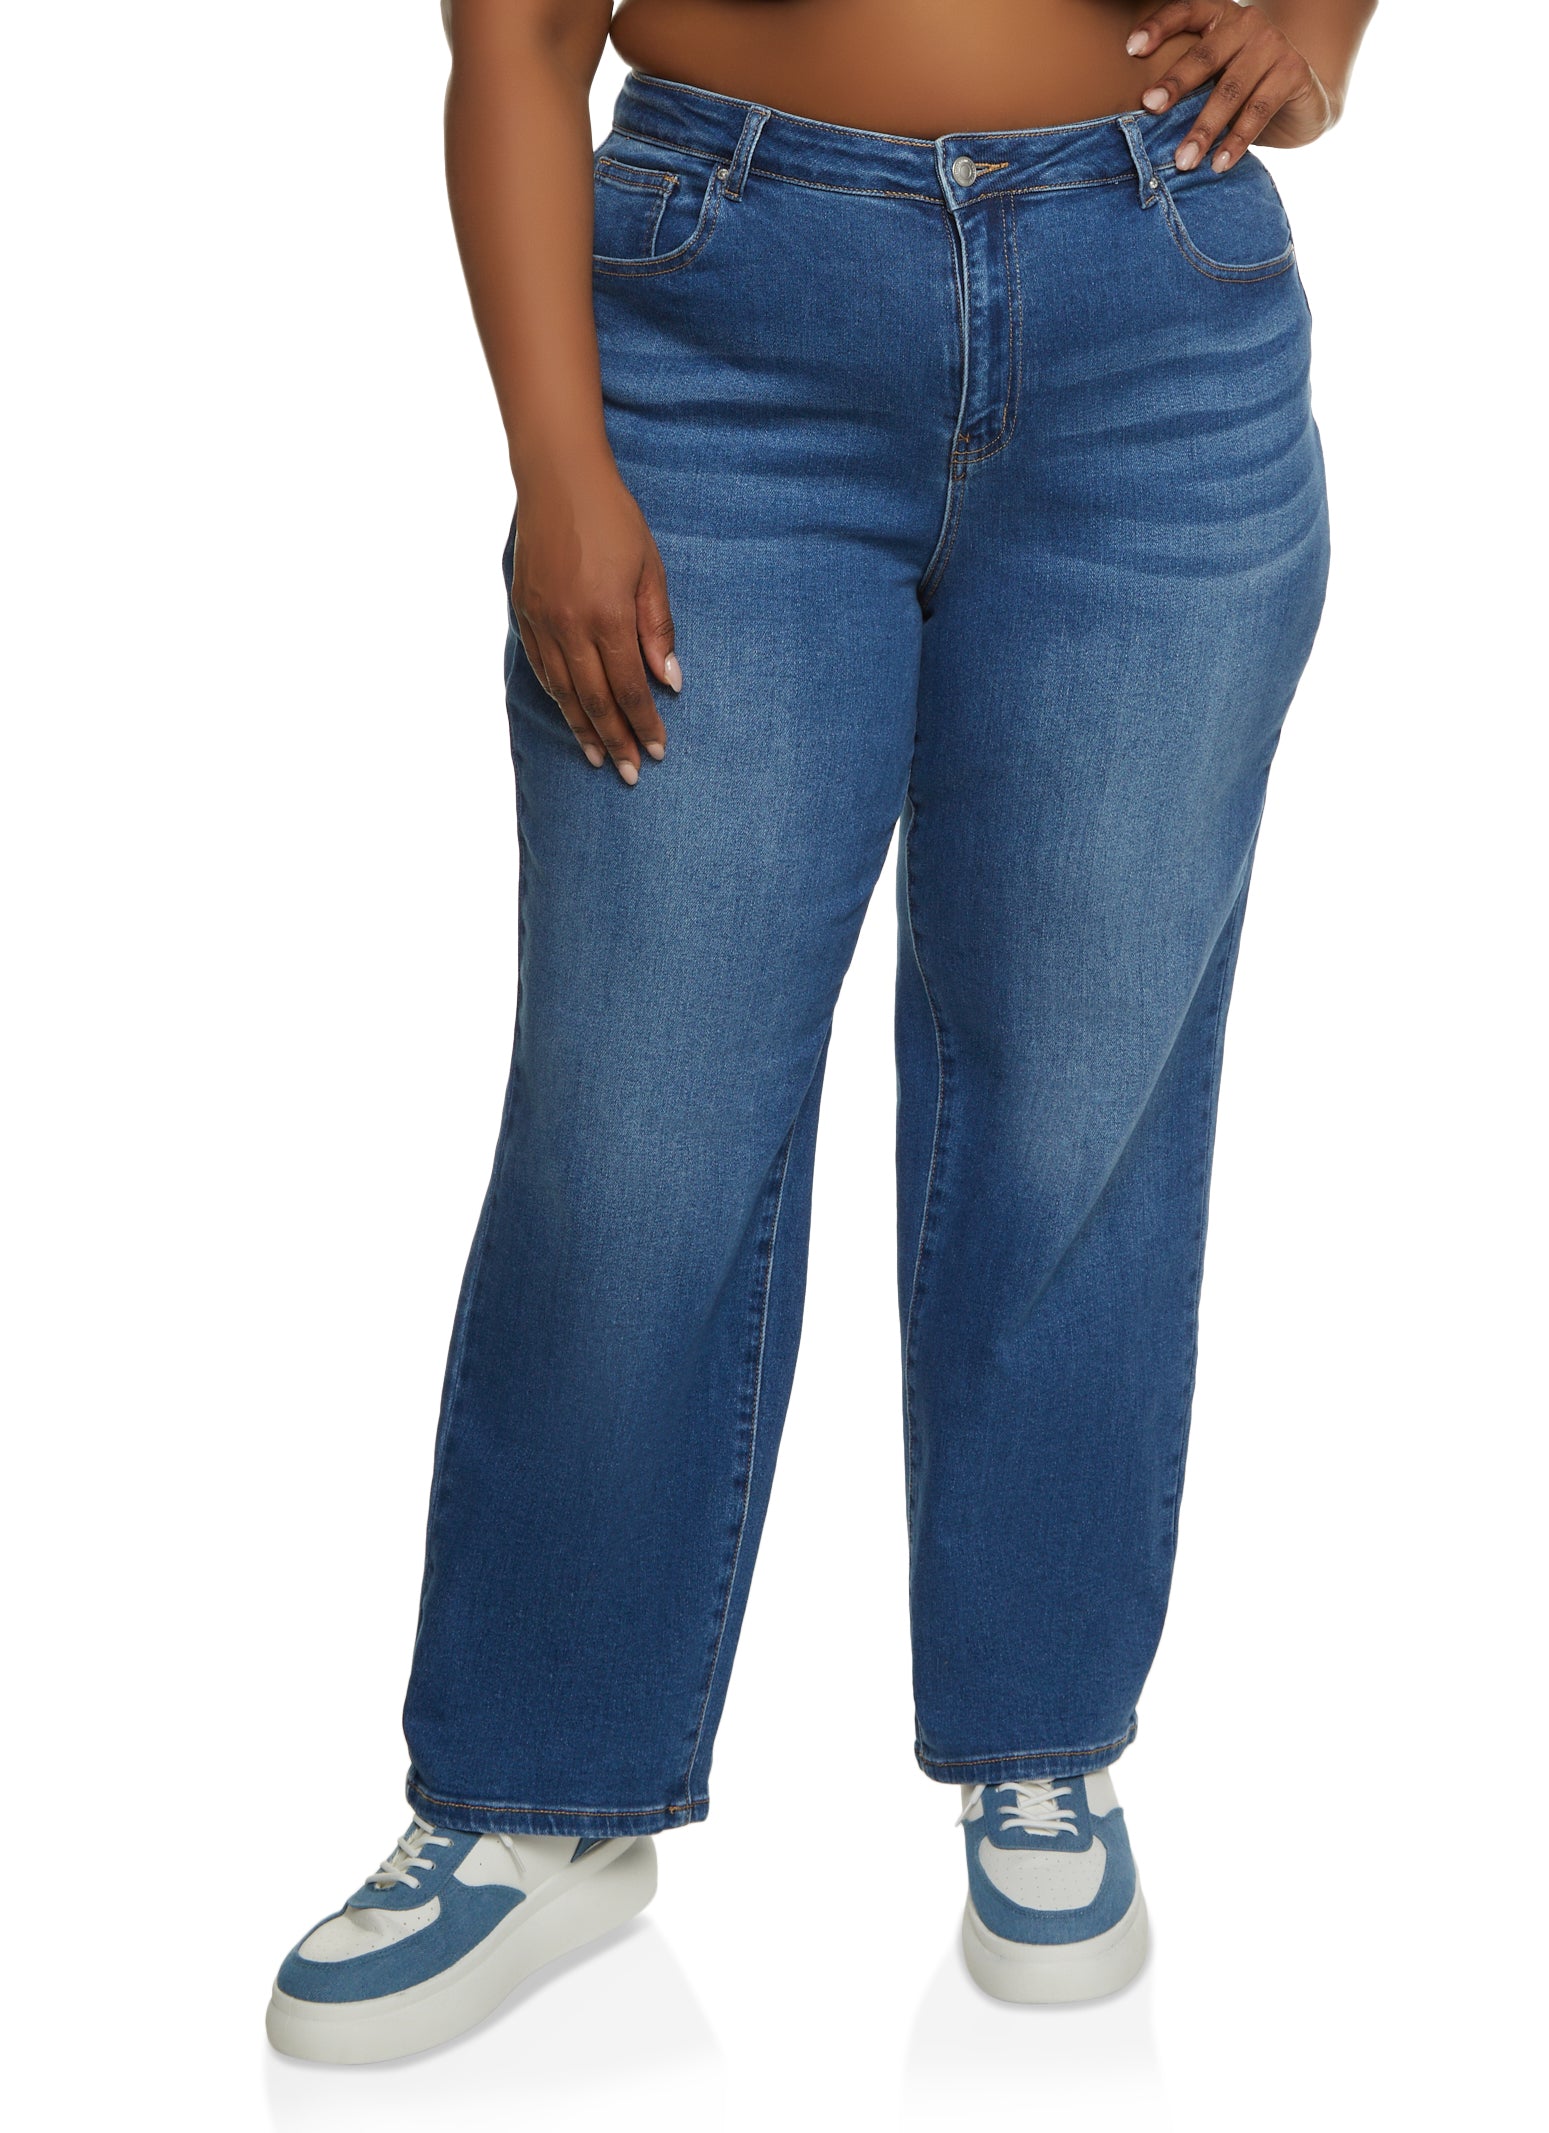 Women Rainbow Jeans Tie Dye Pants Denim Wide Leg Hip Hop Plus Size